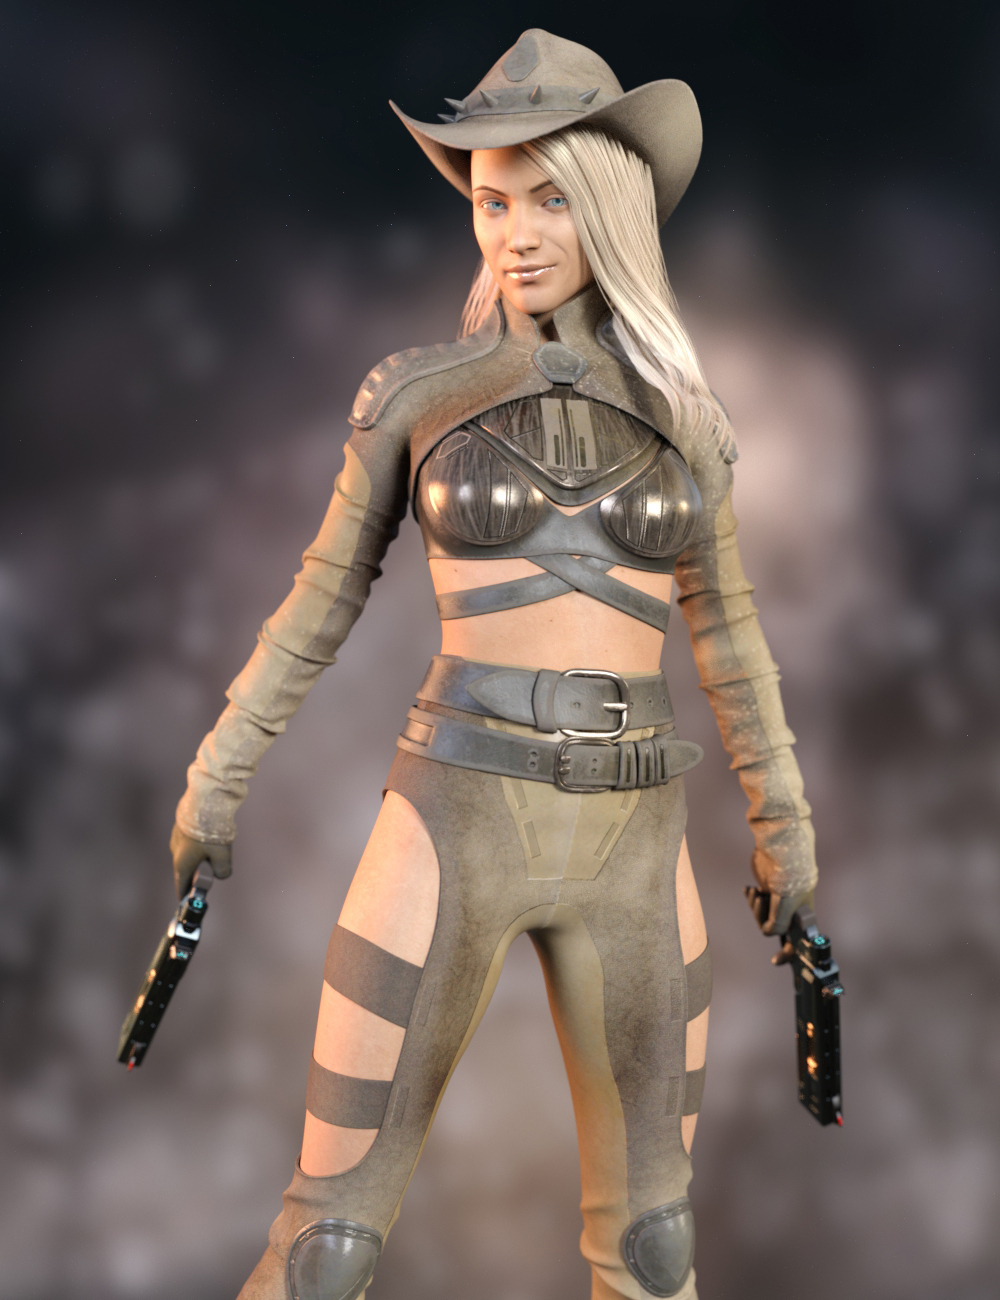 Sci-fi Rebel Rider Outfit for Genesis 8.1 Females Bundle